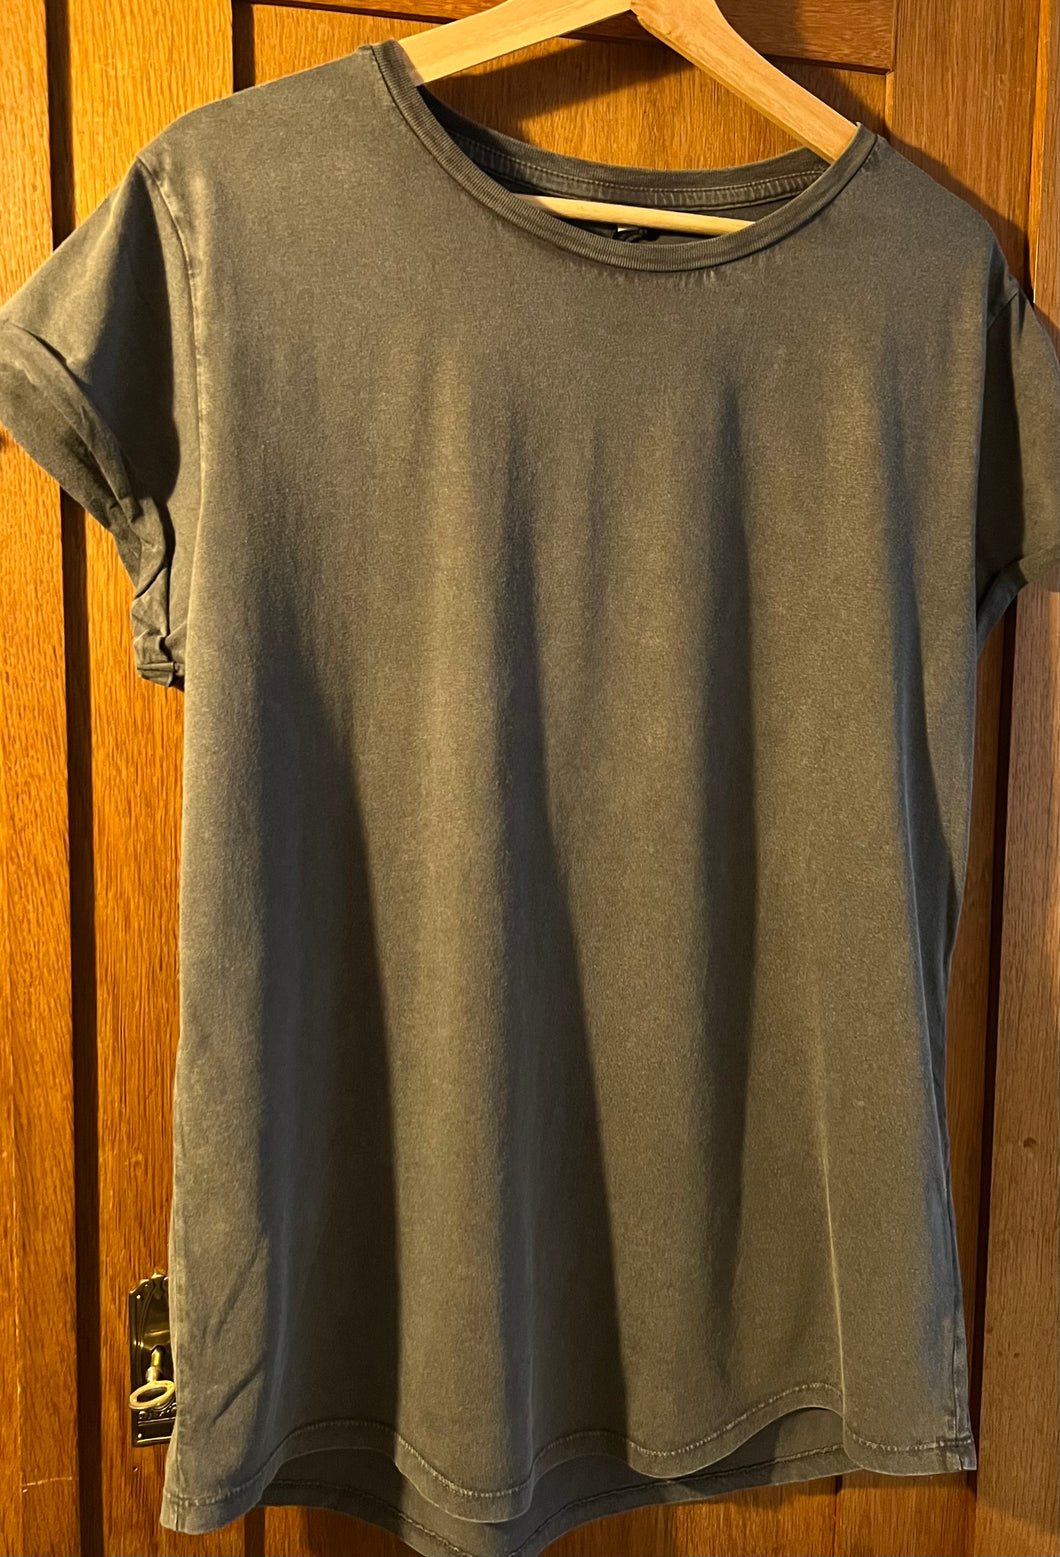 T-Shirt Biene am Nacken, Stone washed grey, L